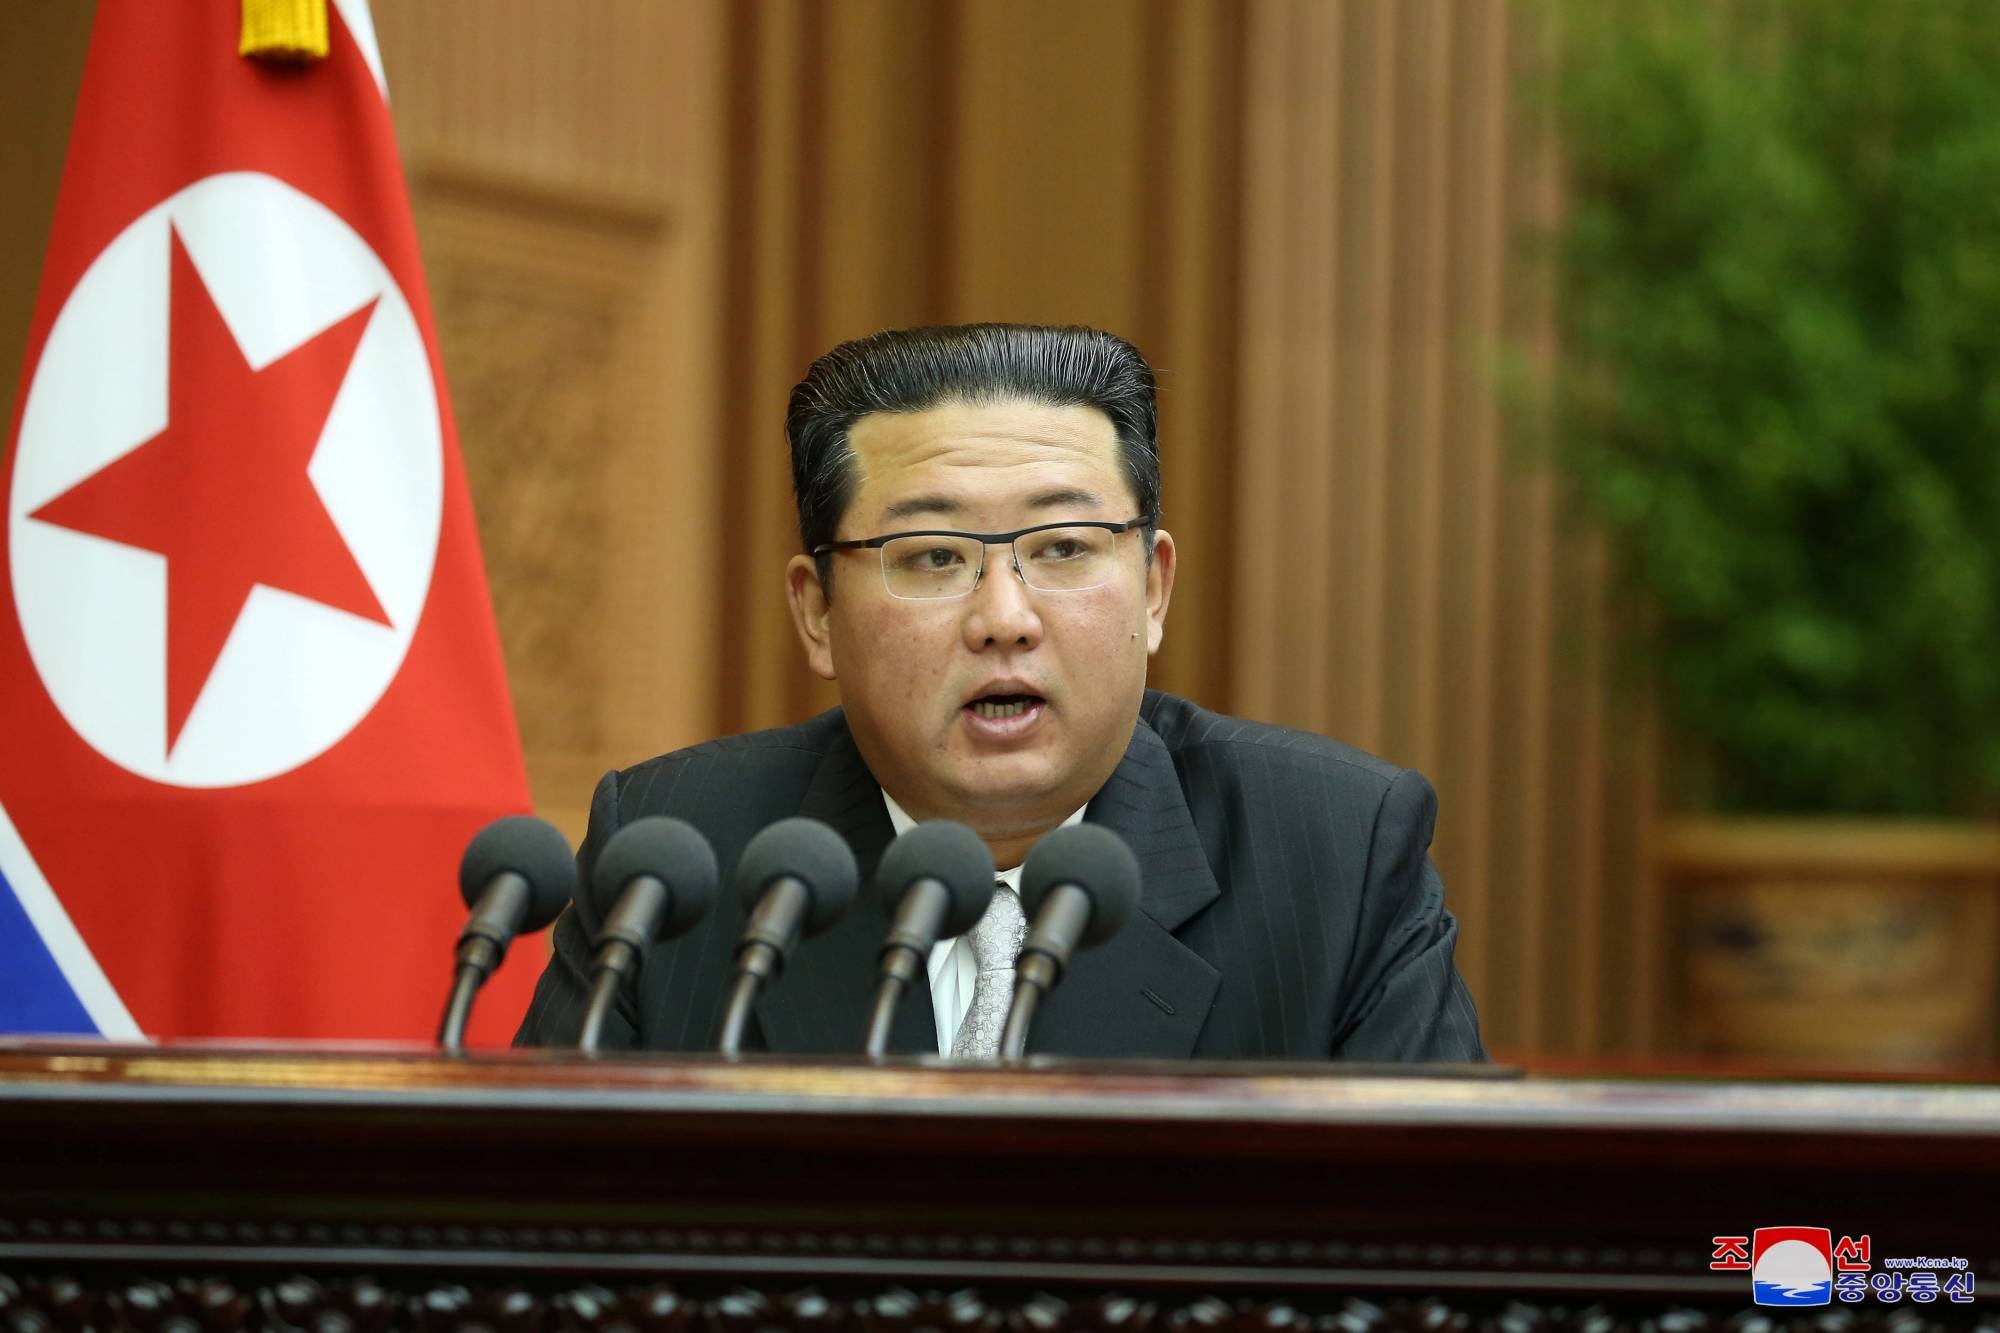 North Korea's Kim says US offer of talks a 'petty trick'